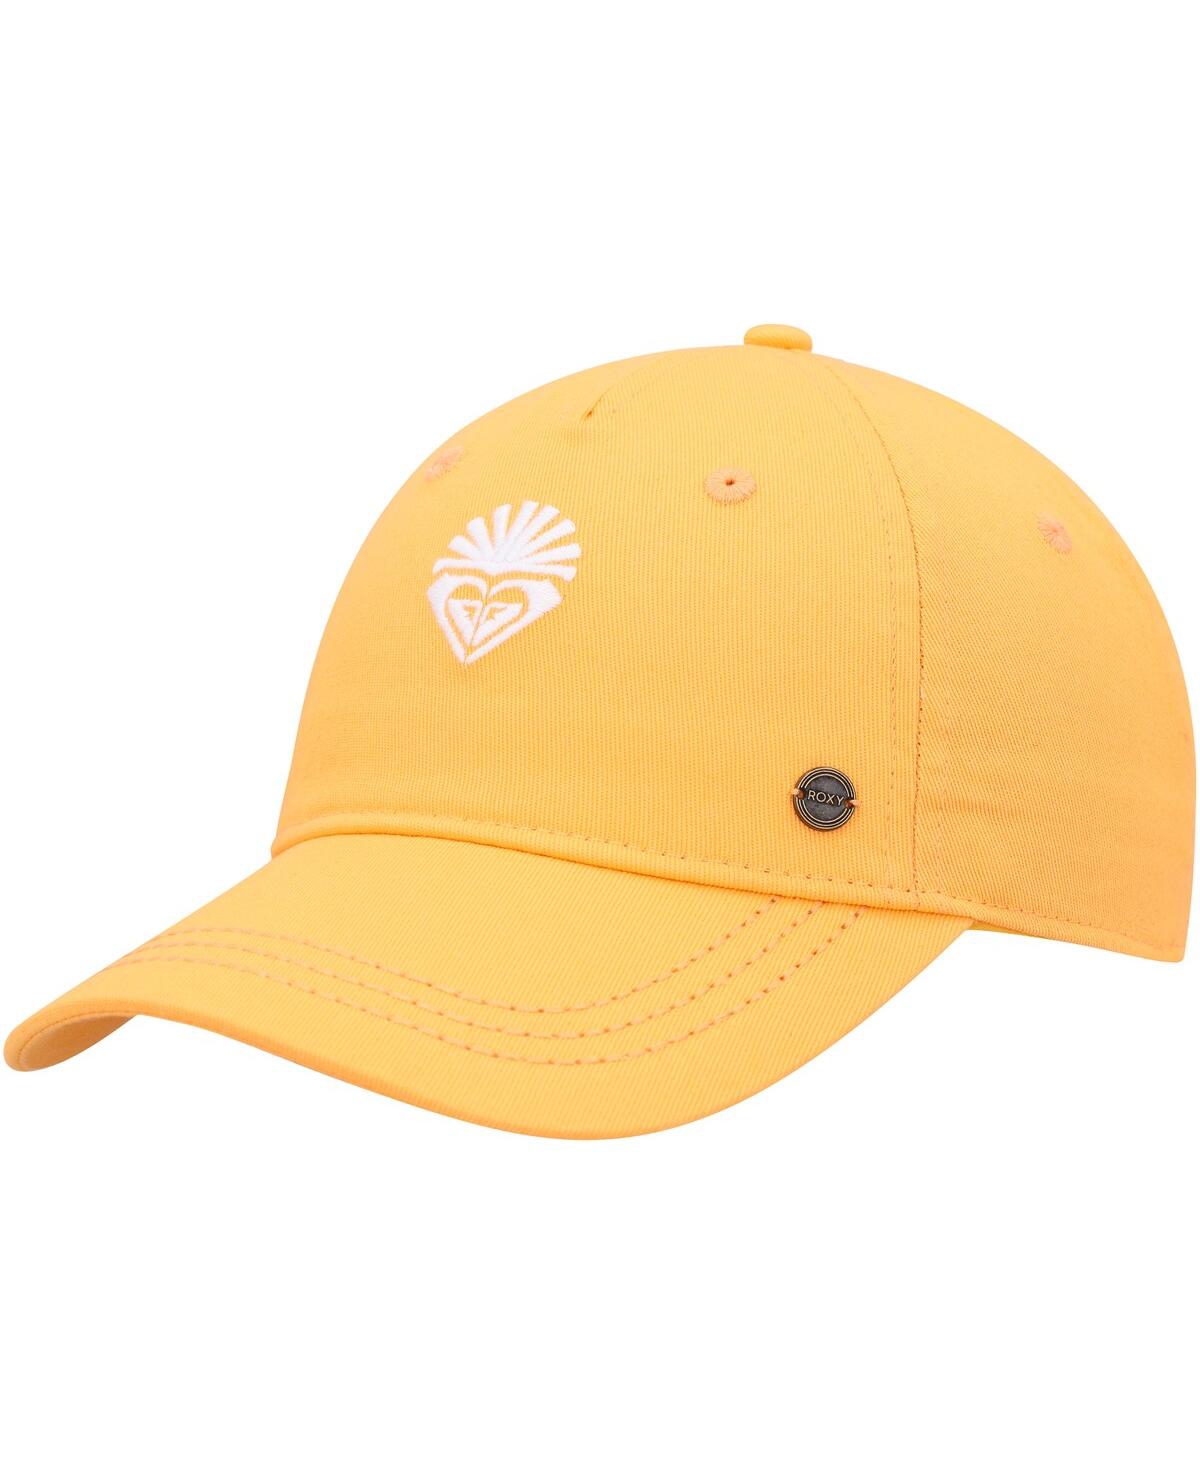 Women's Roxy Orange Next Level Adjustable Hat - Orange